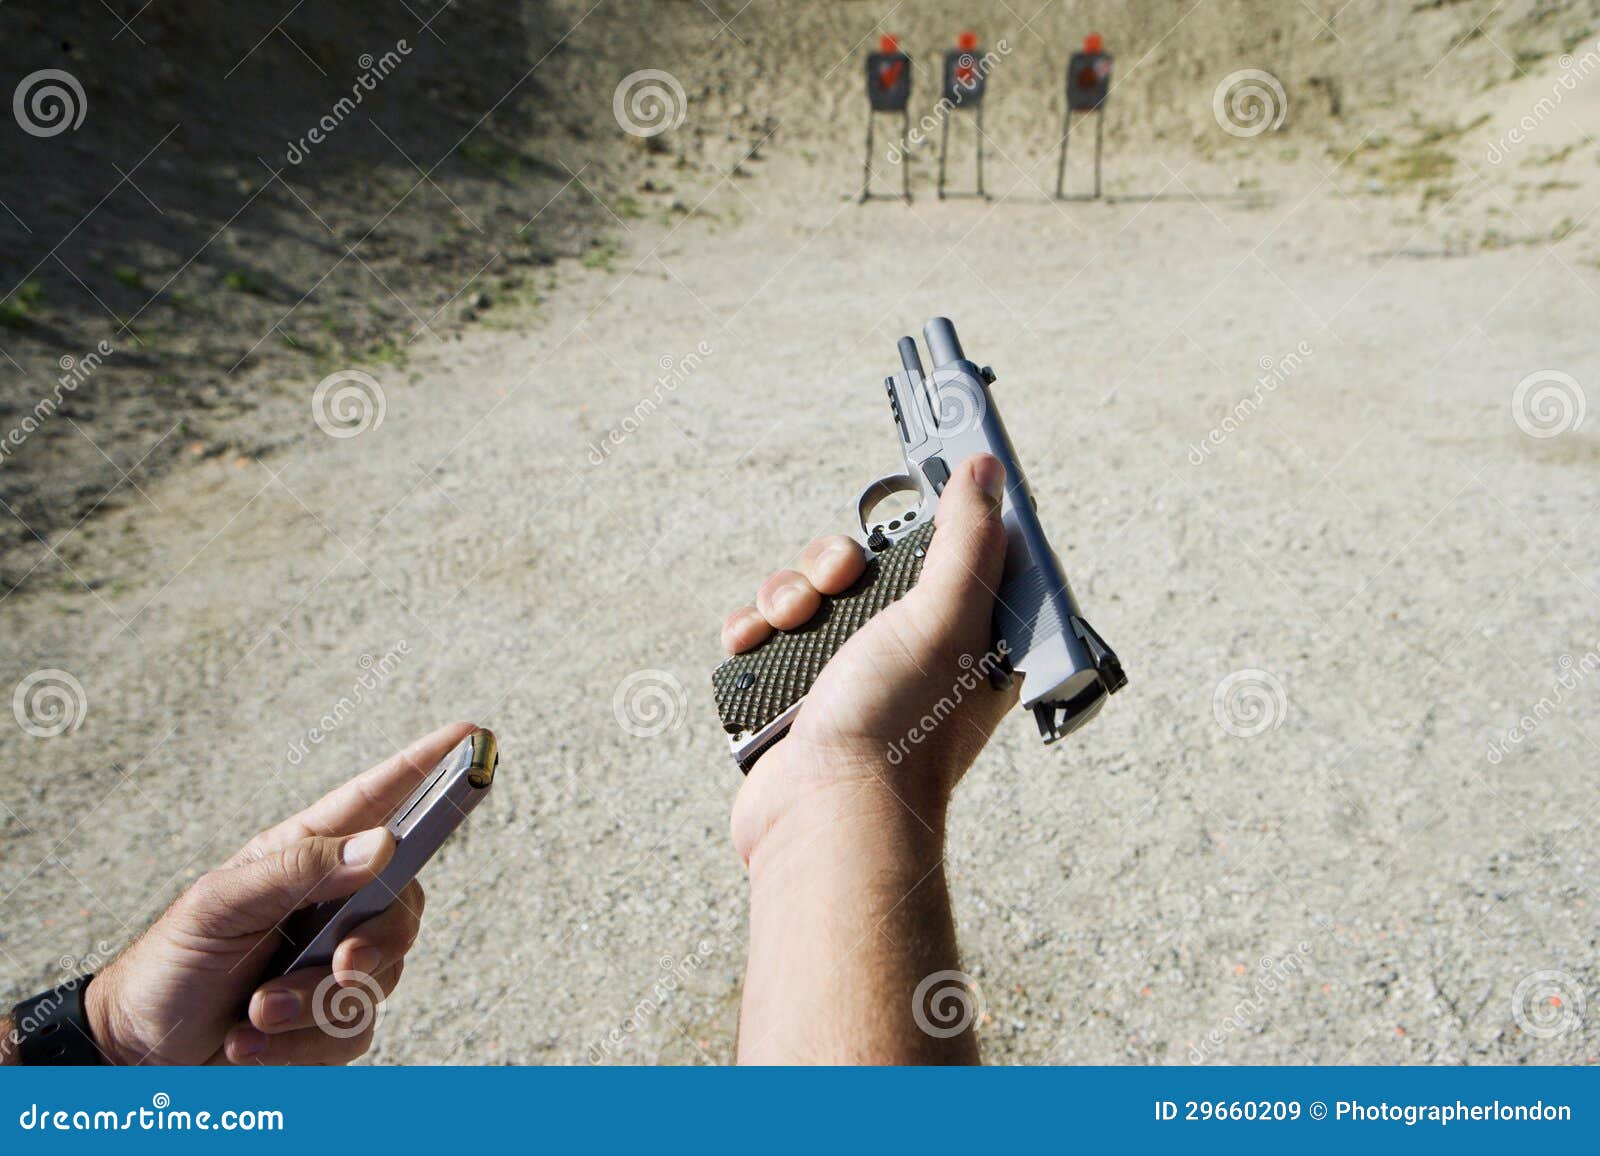 man's hands loading gun at firing range